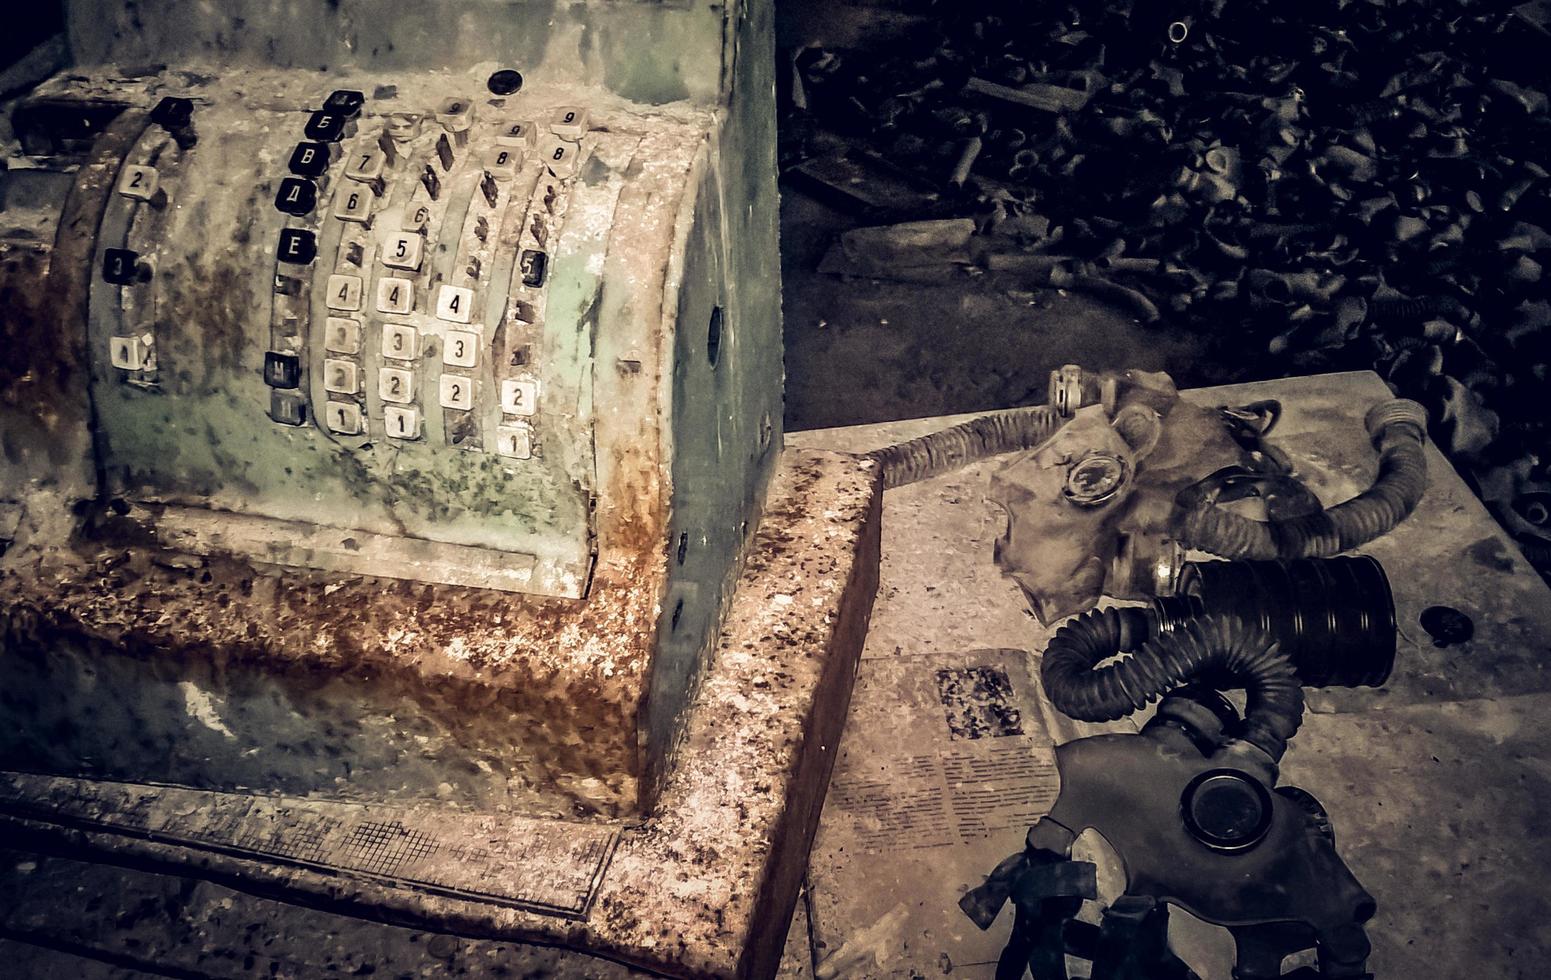 pripyat, oekraïne, 2021 - oude kassa en gasmaskers in een verlaten huis in Tsjernobyl foto